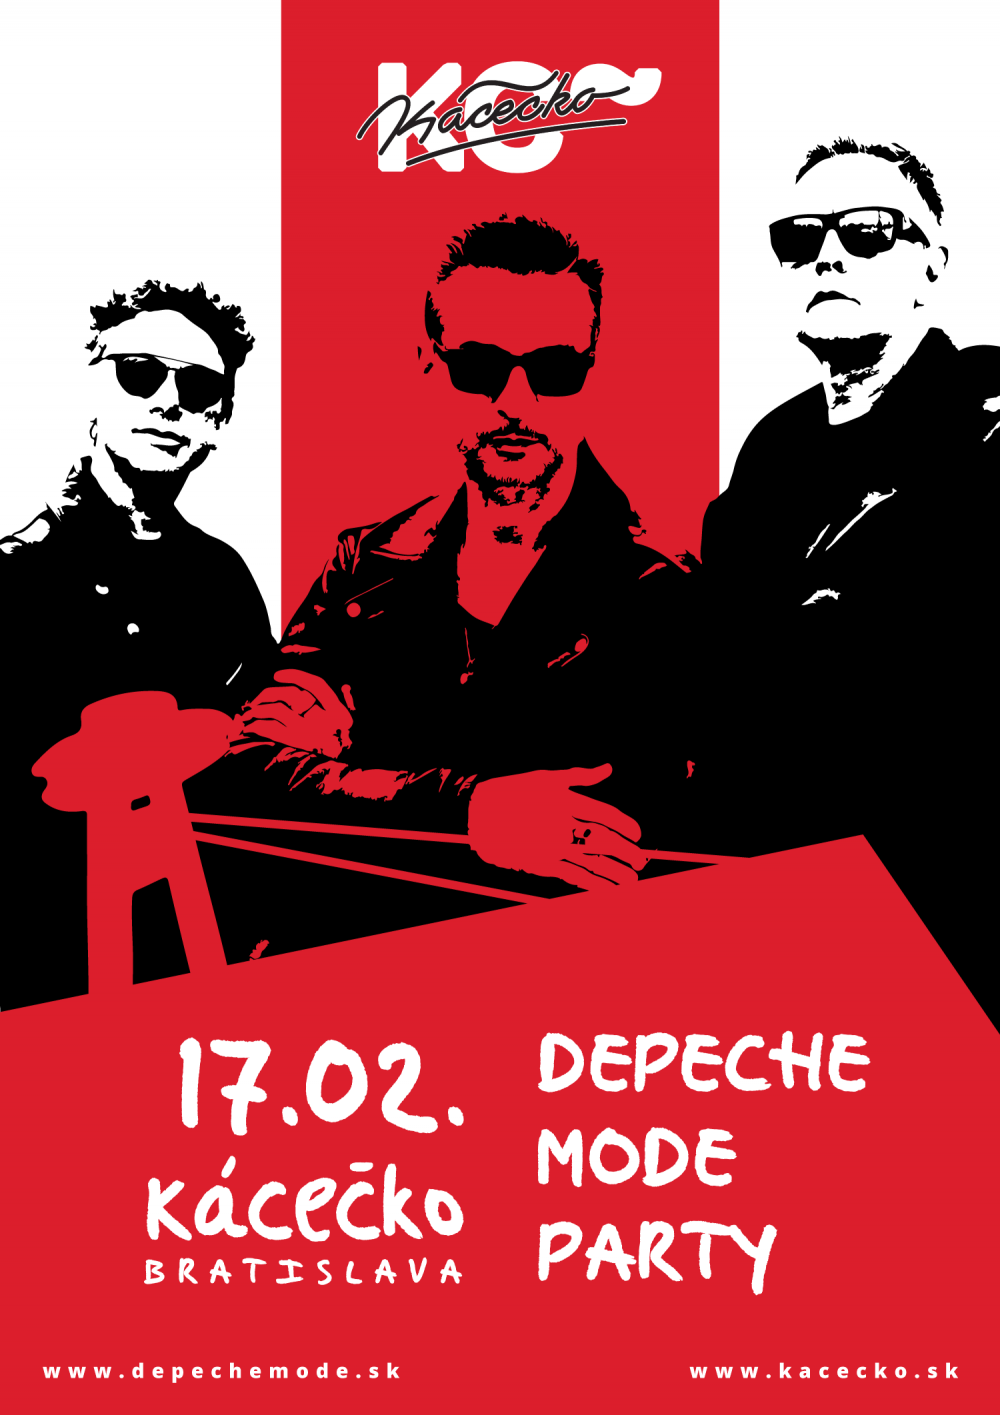 Plagát: Depeche Mode Warm Up Party